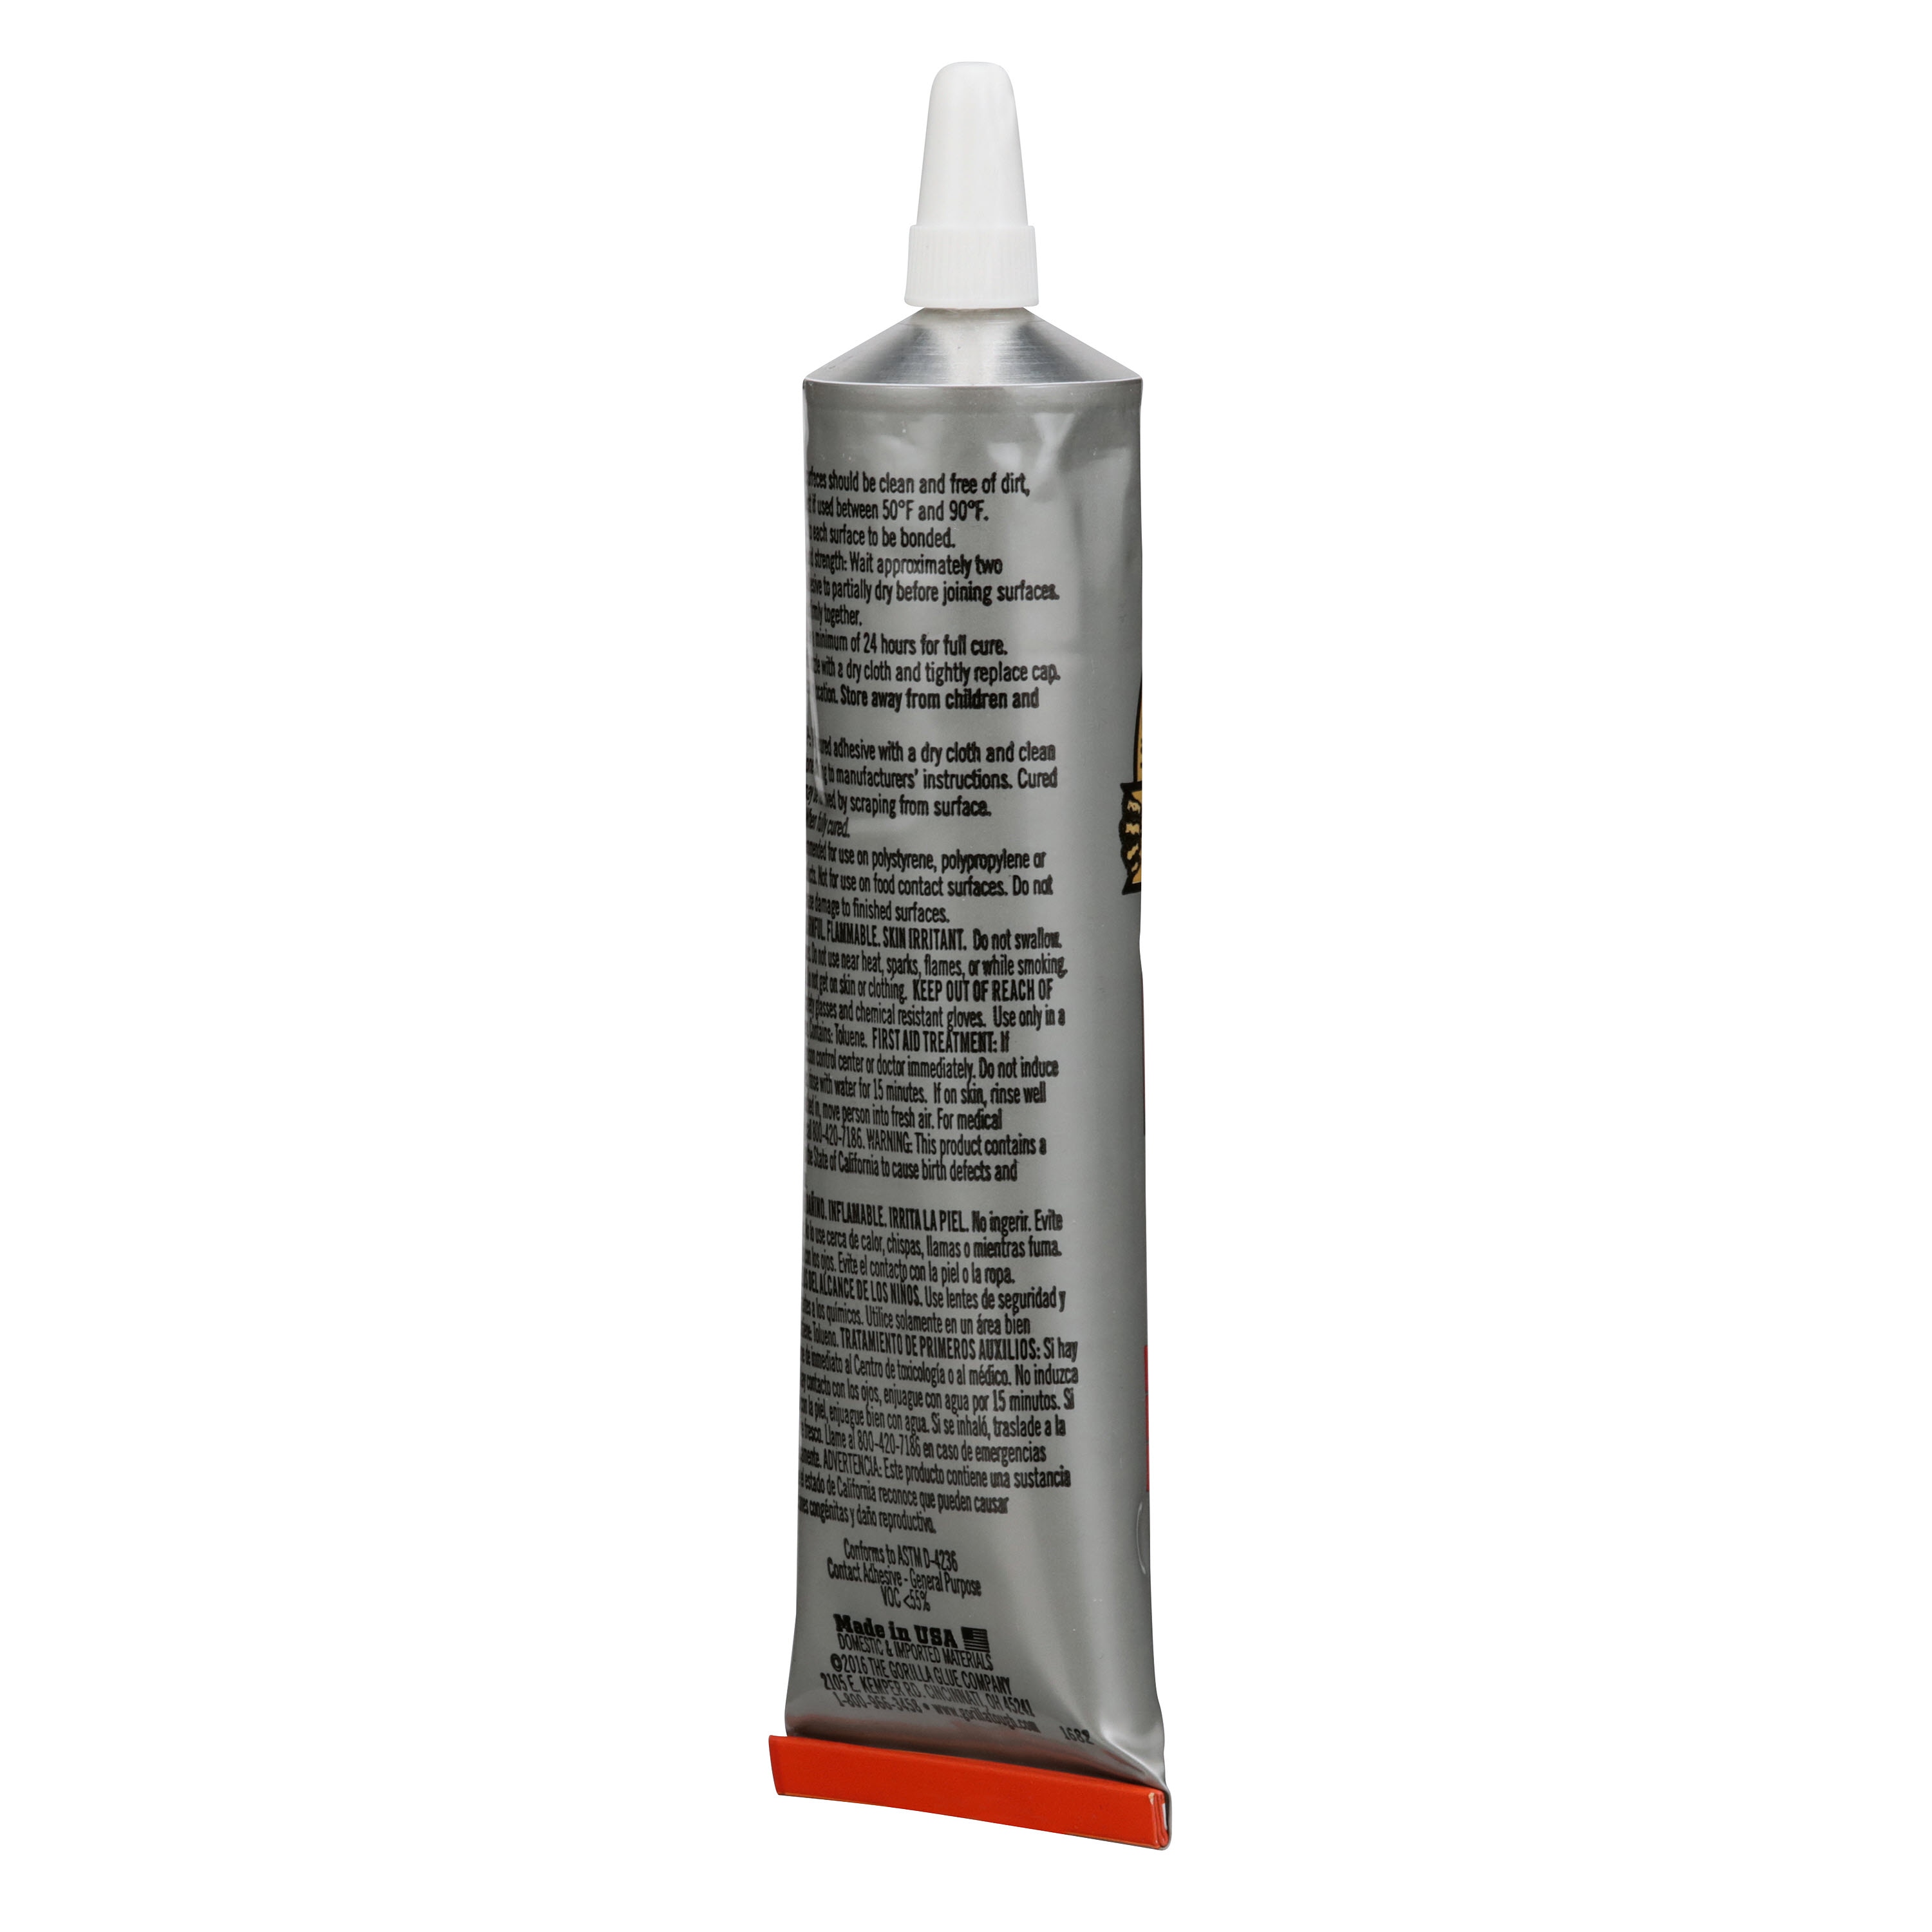 Gorilla Glue Quick Cure Adhesive 2oz. – Electronix Express